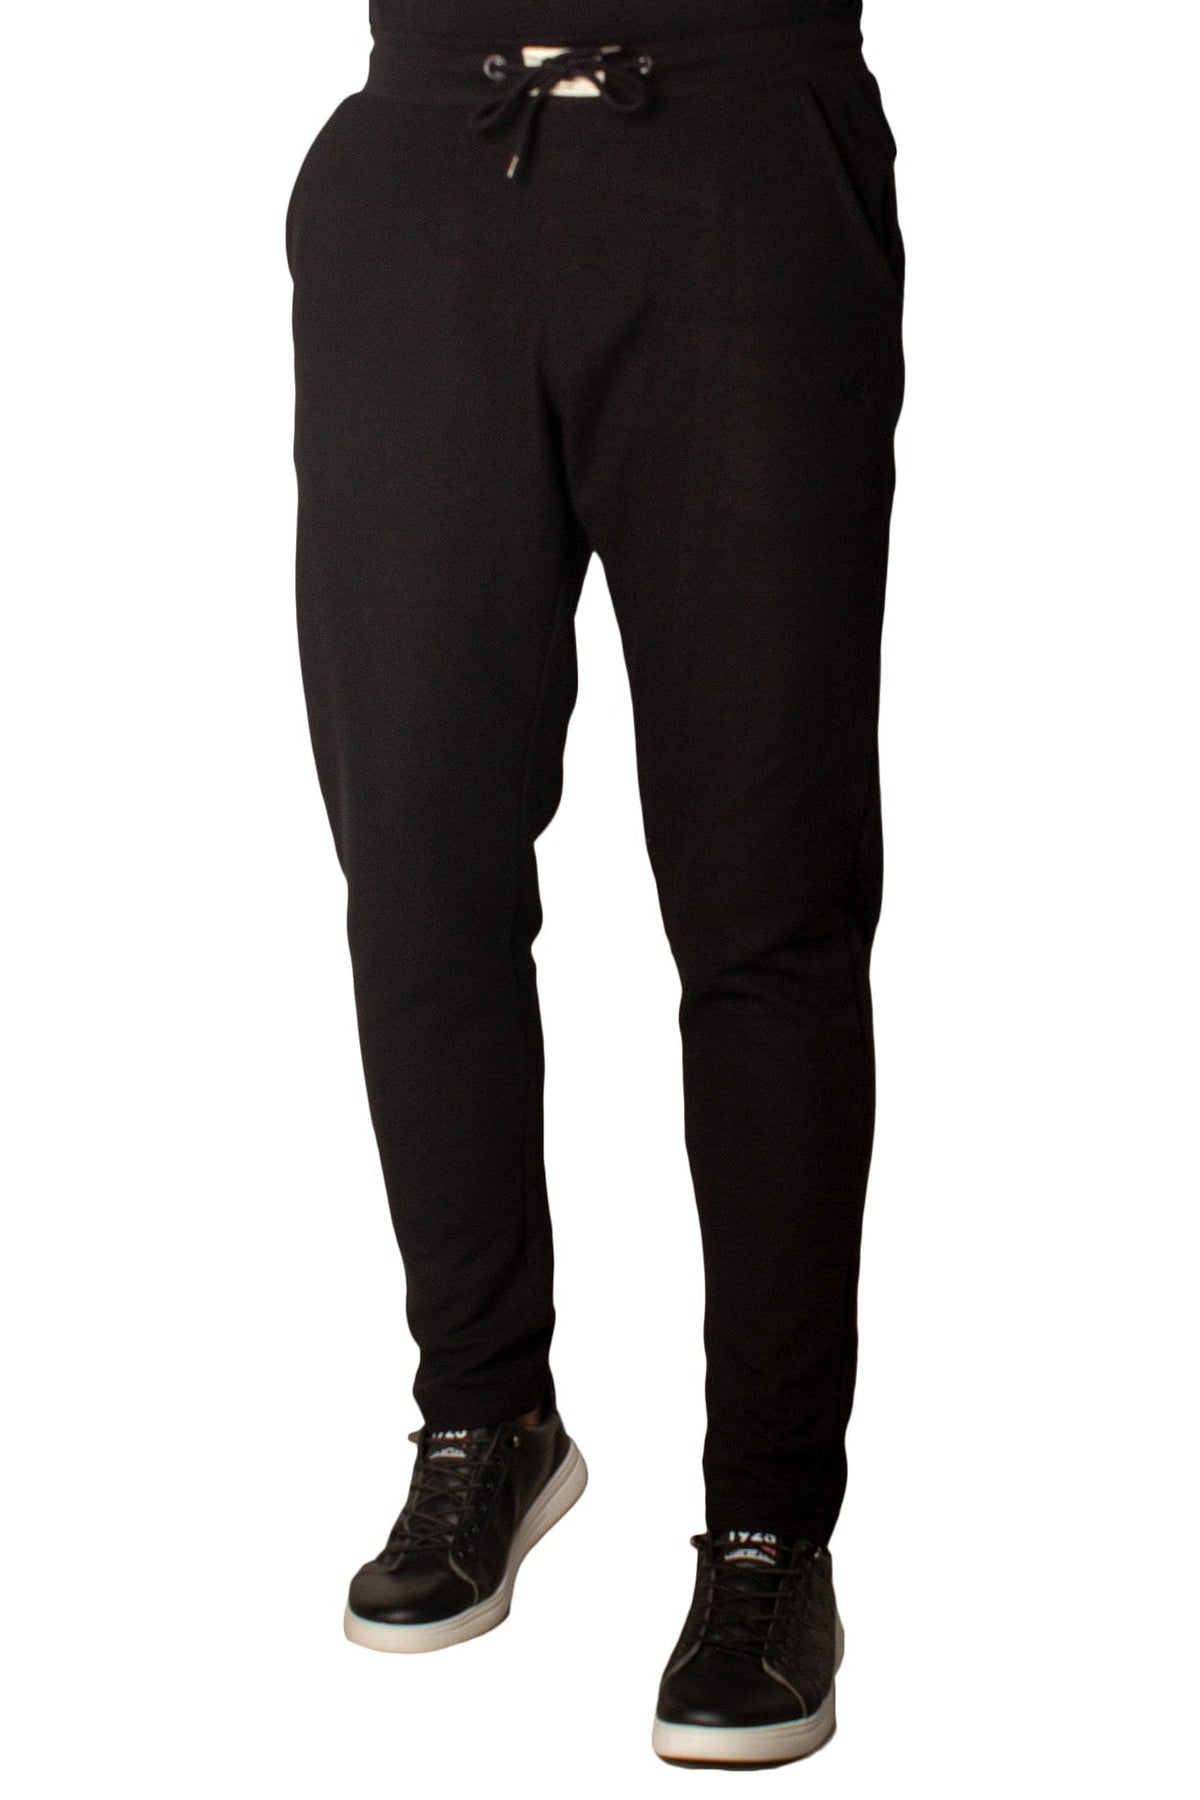 Casual Trouser Lwr-0318 Black